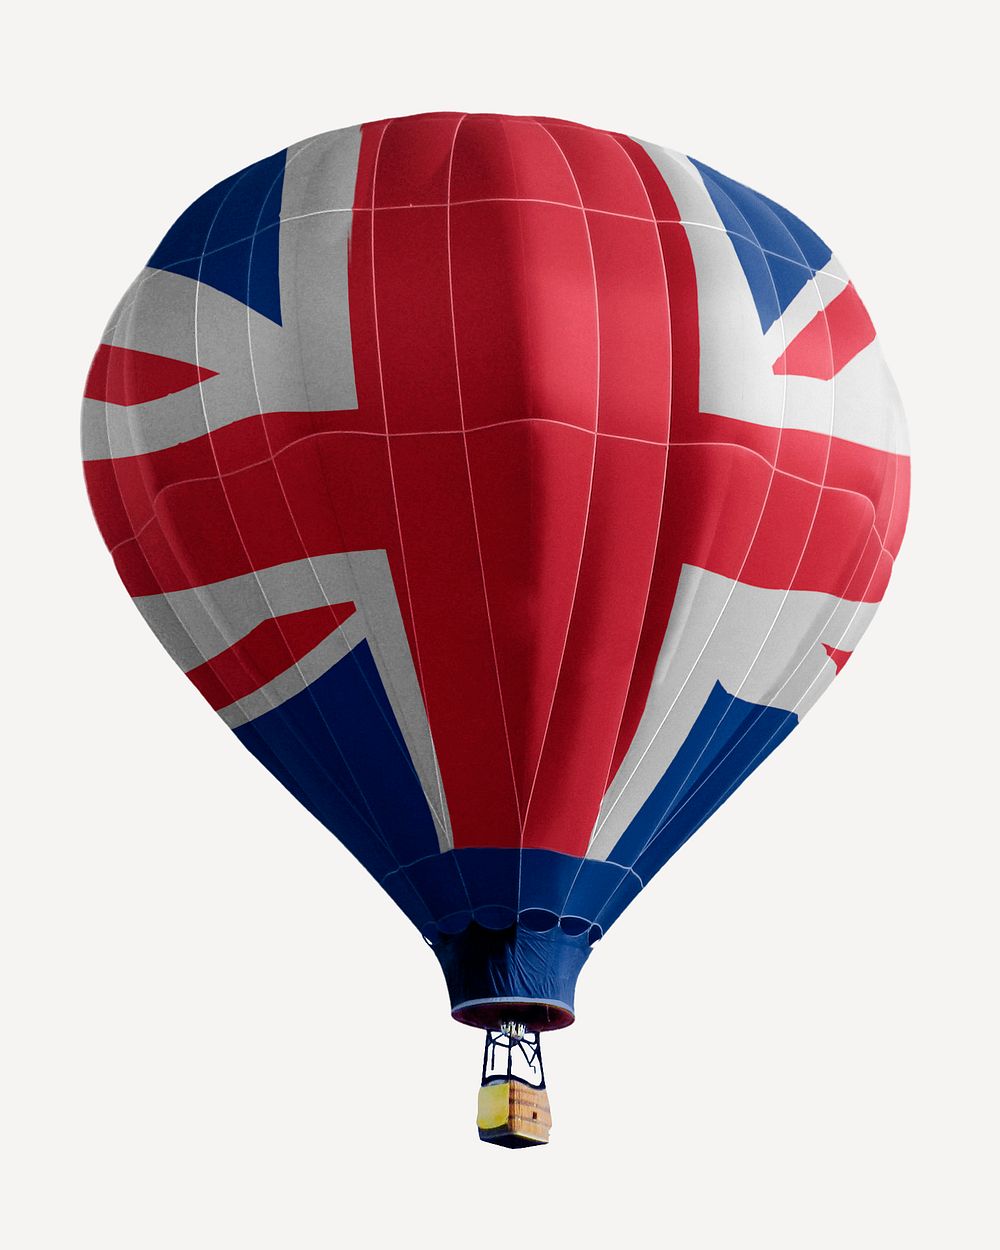 United Kingdom flag on hot air balloon psd